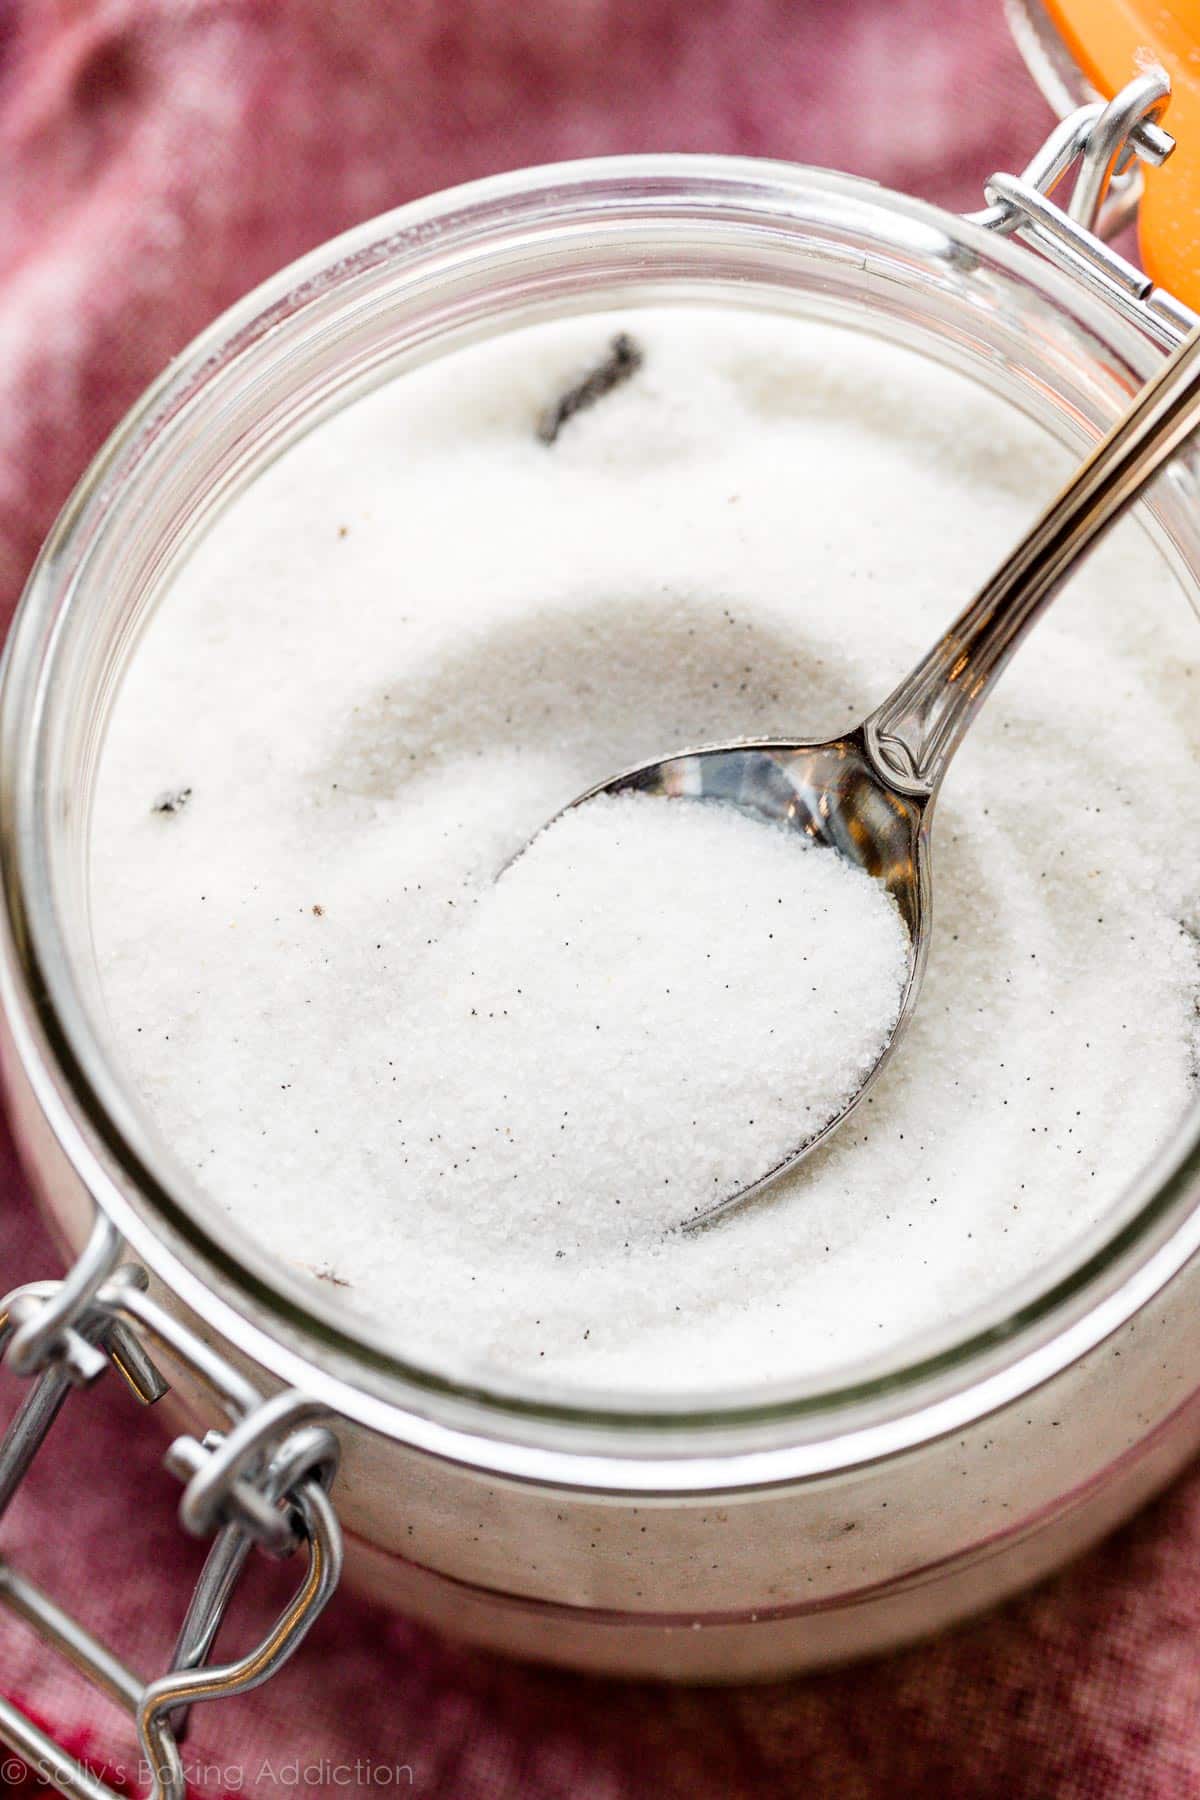 a spoon scooping up homemade vanilla sugar